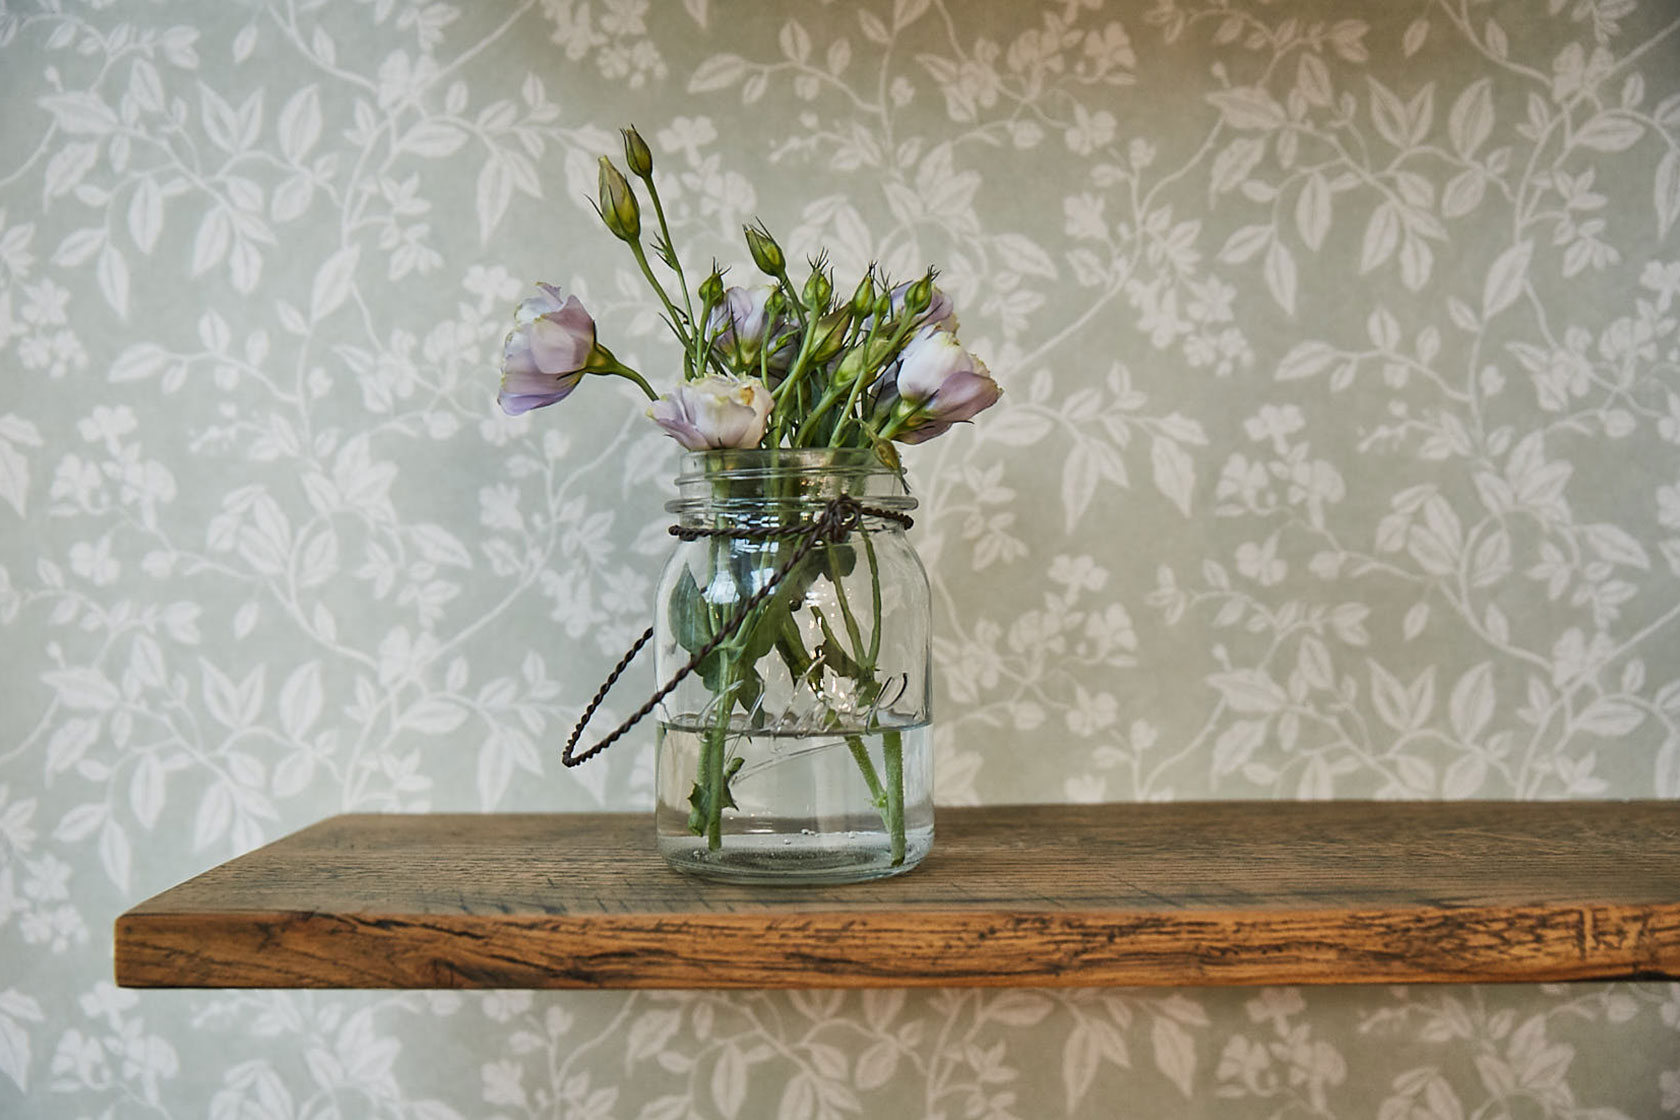 Flowers in glass jar sit on rustic oak shelf with green floral wallpaper background